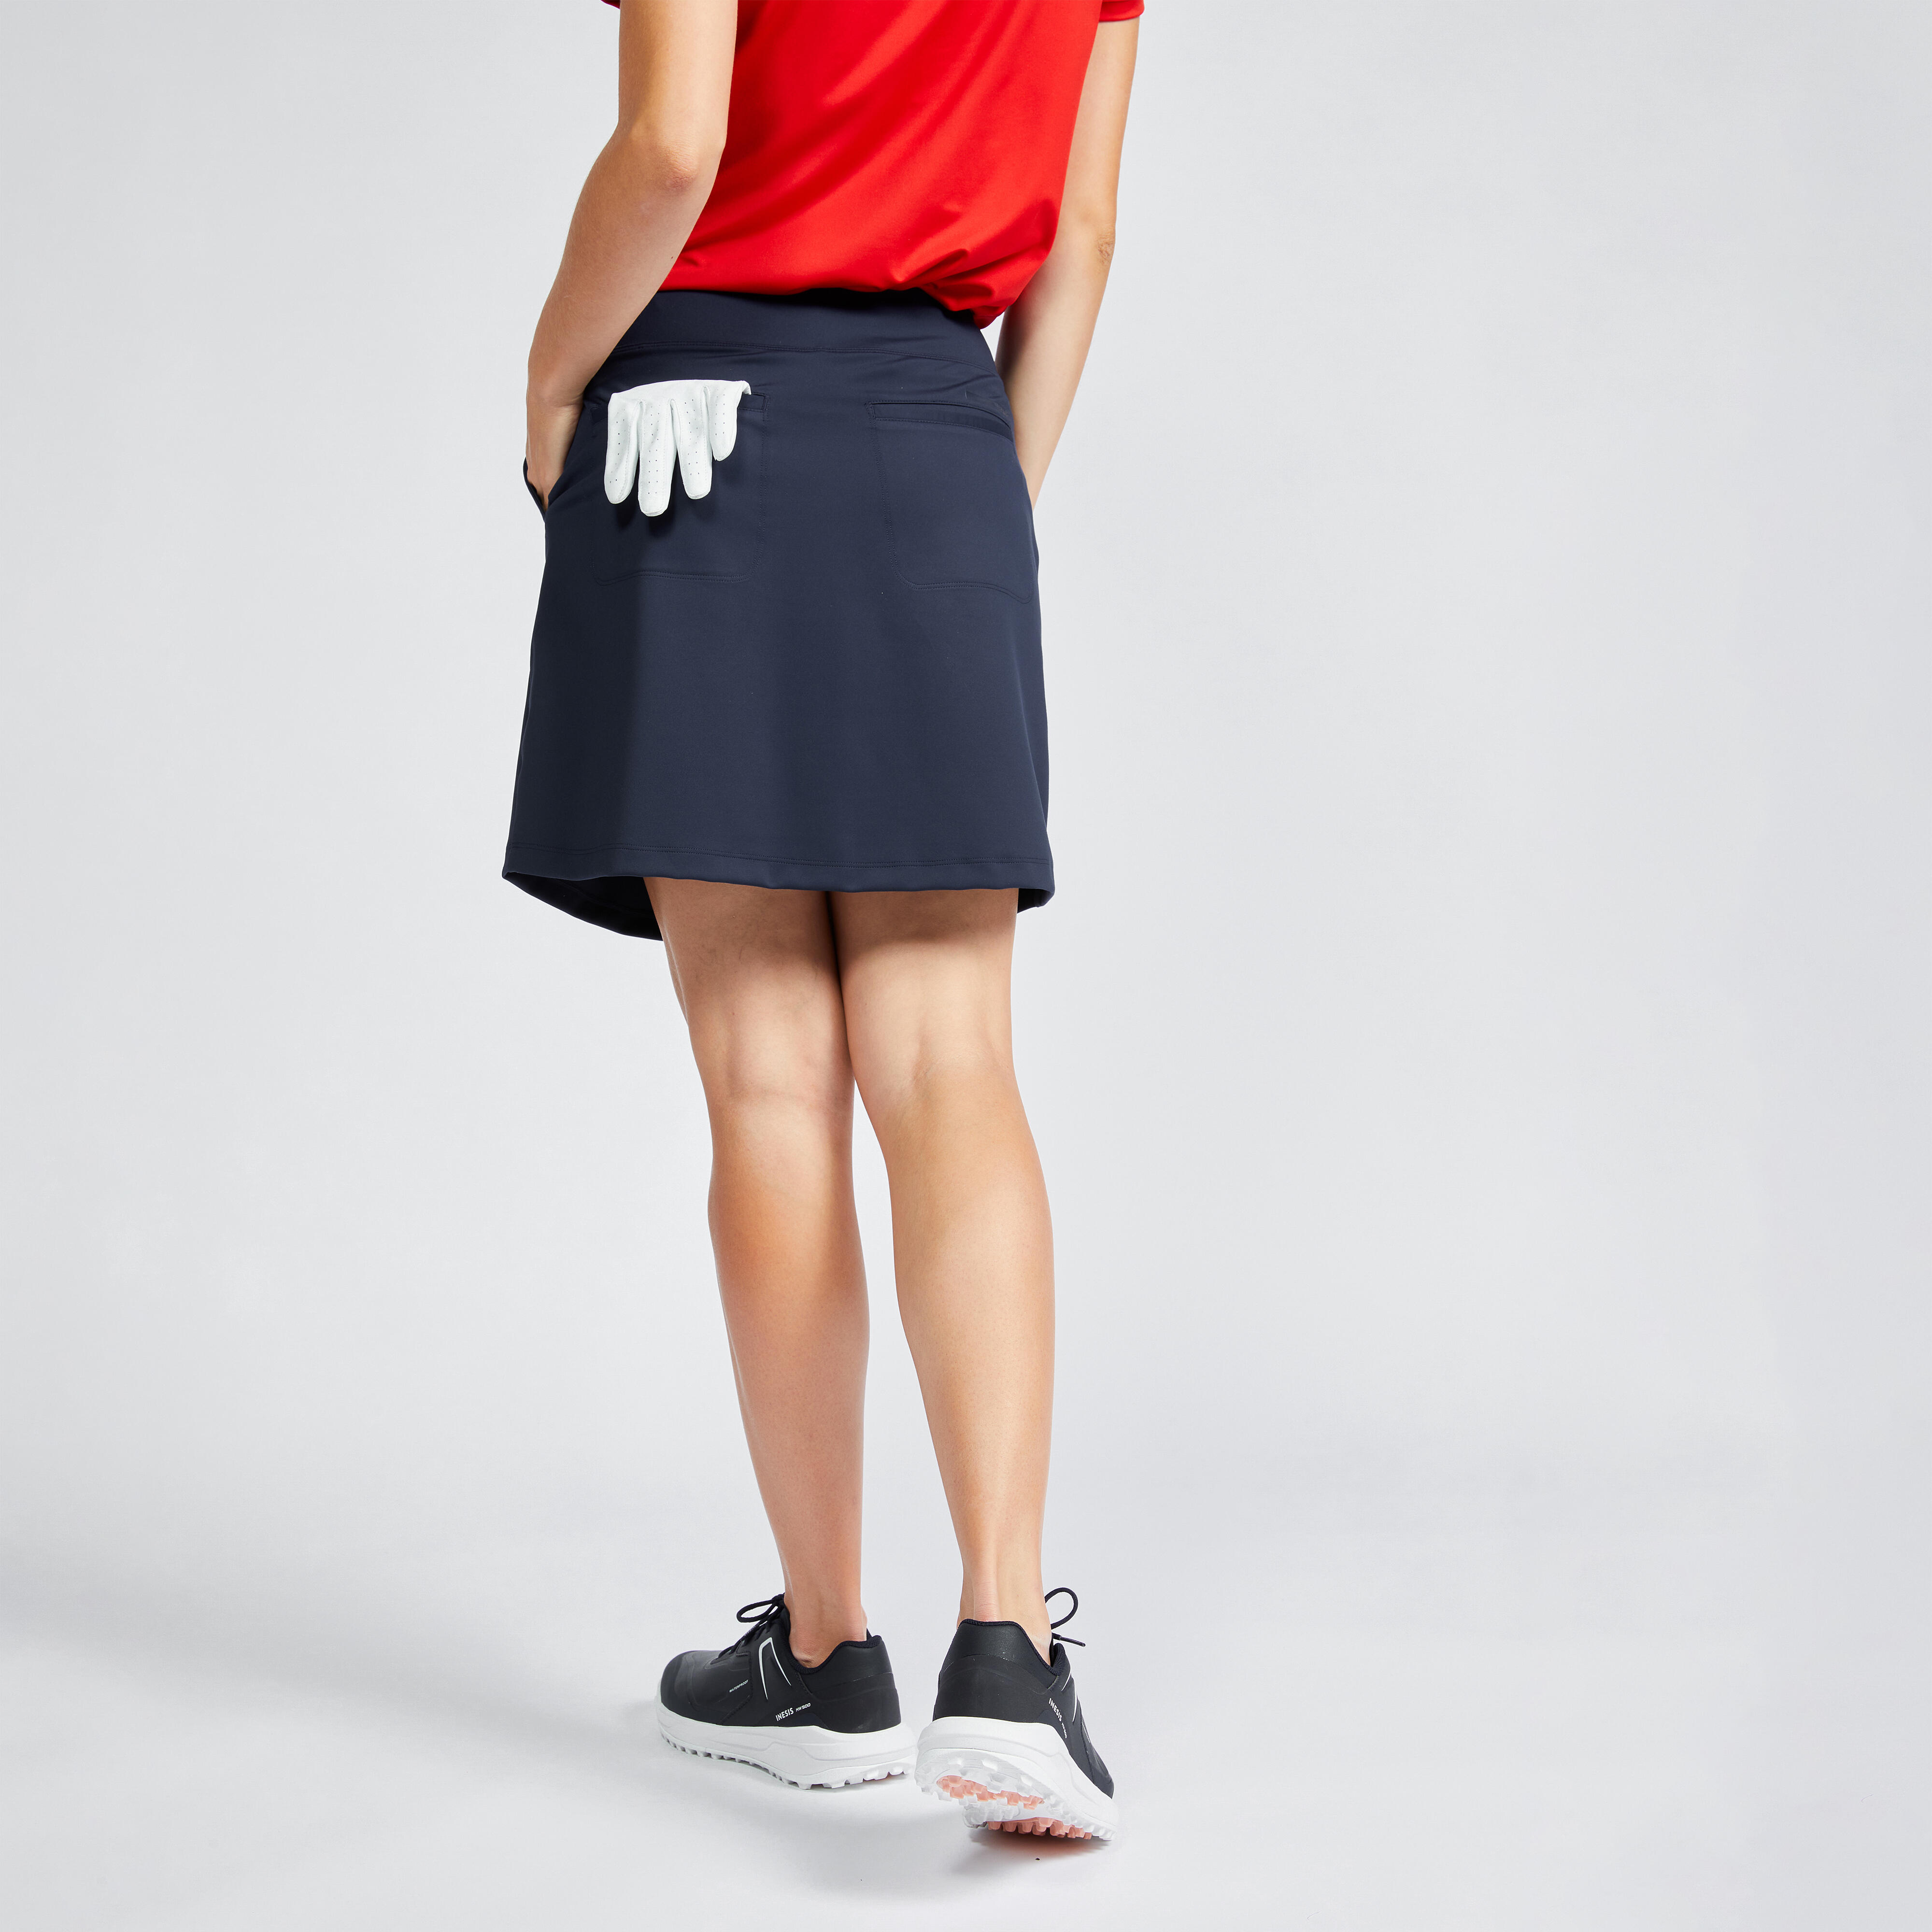 HAMYNANA Short Skirts Womens Golf Skirt Skort Tennis Badminton